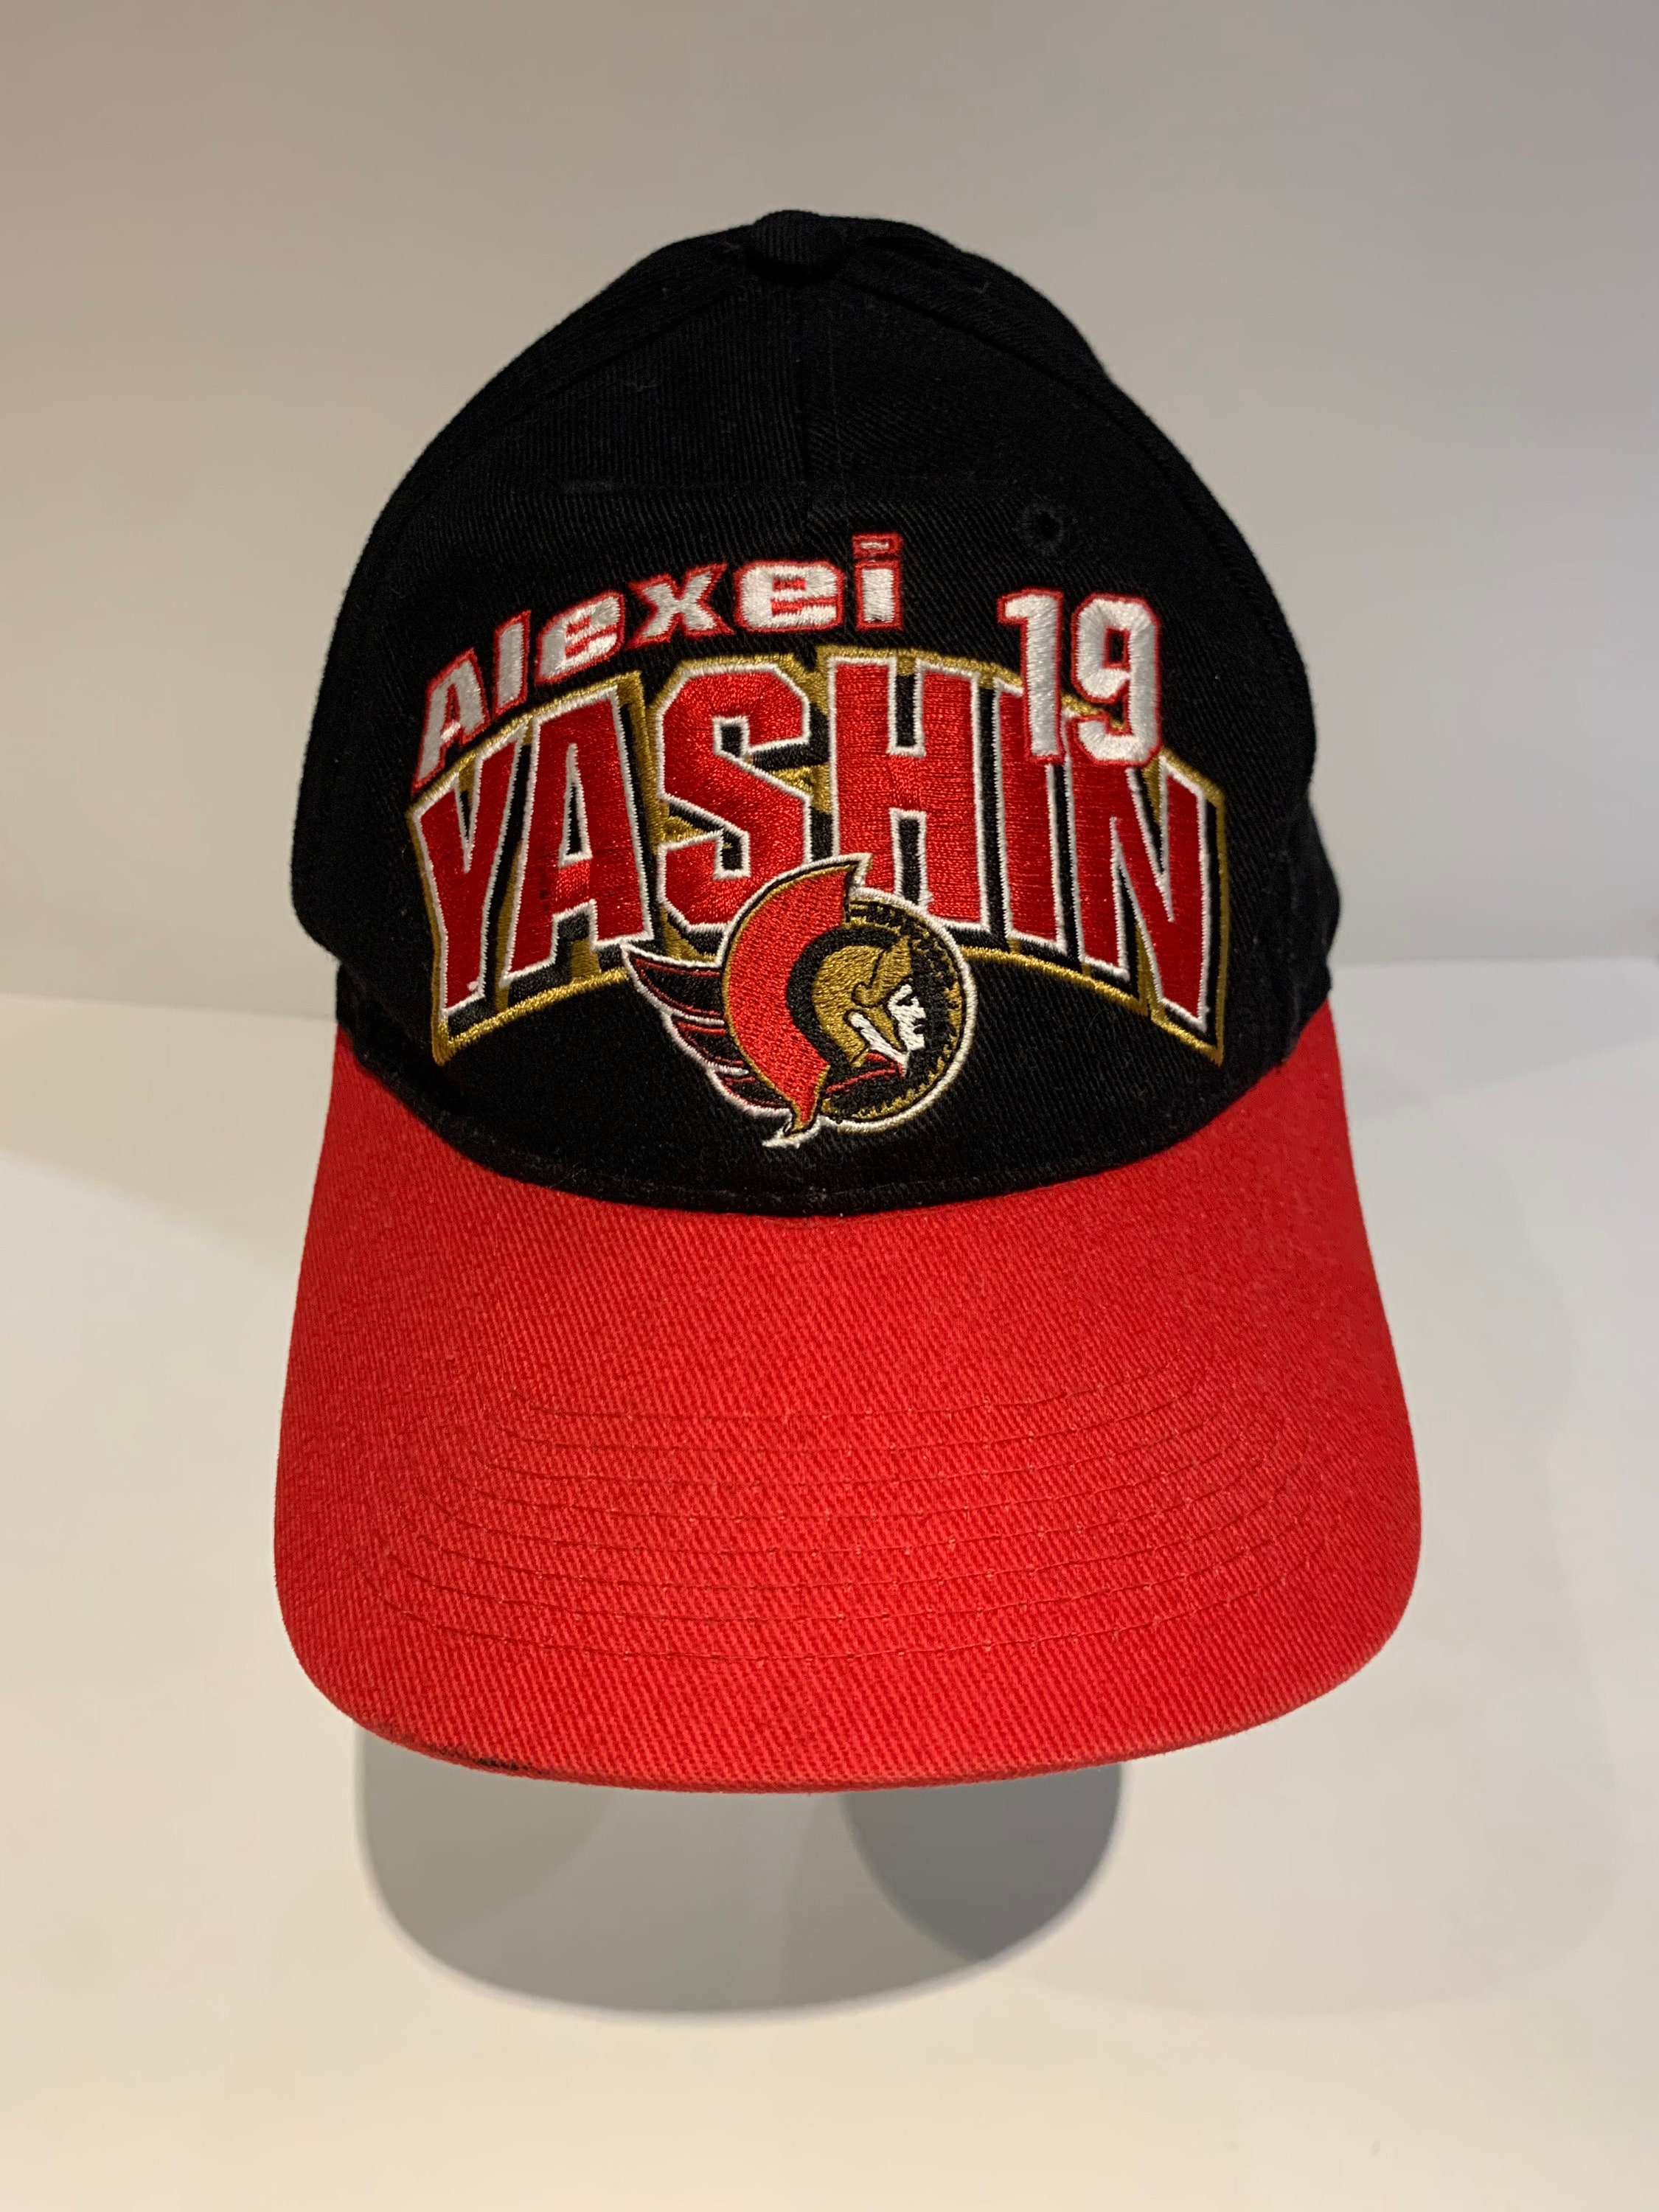 Vintage ottawa senators alexei yashin starter hat 90s | Etsy